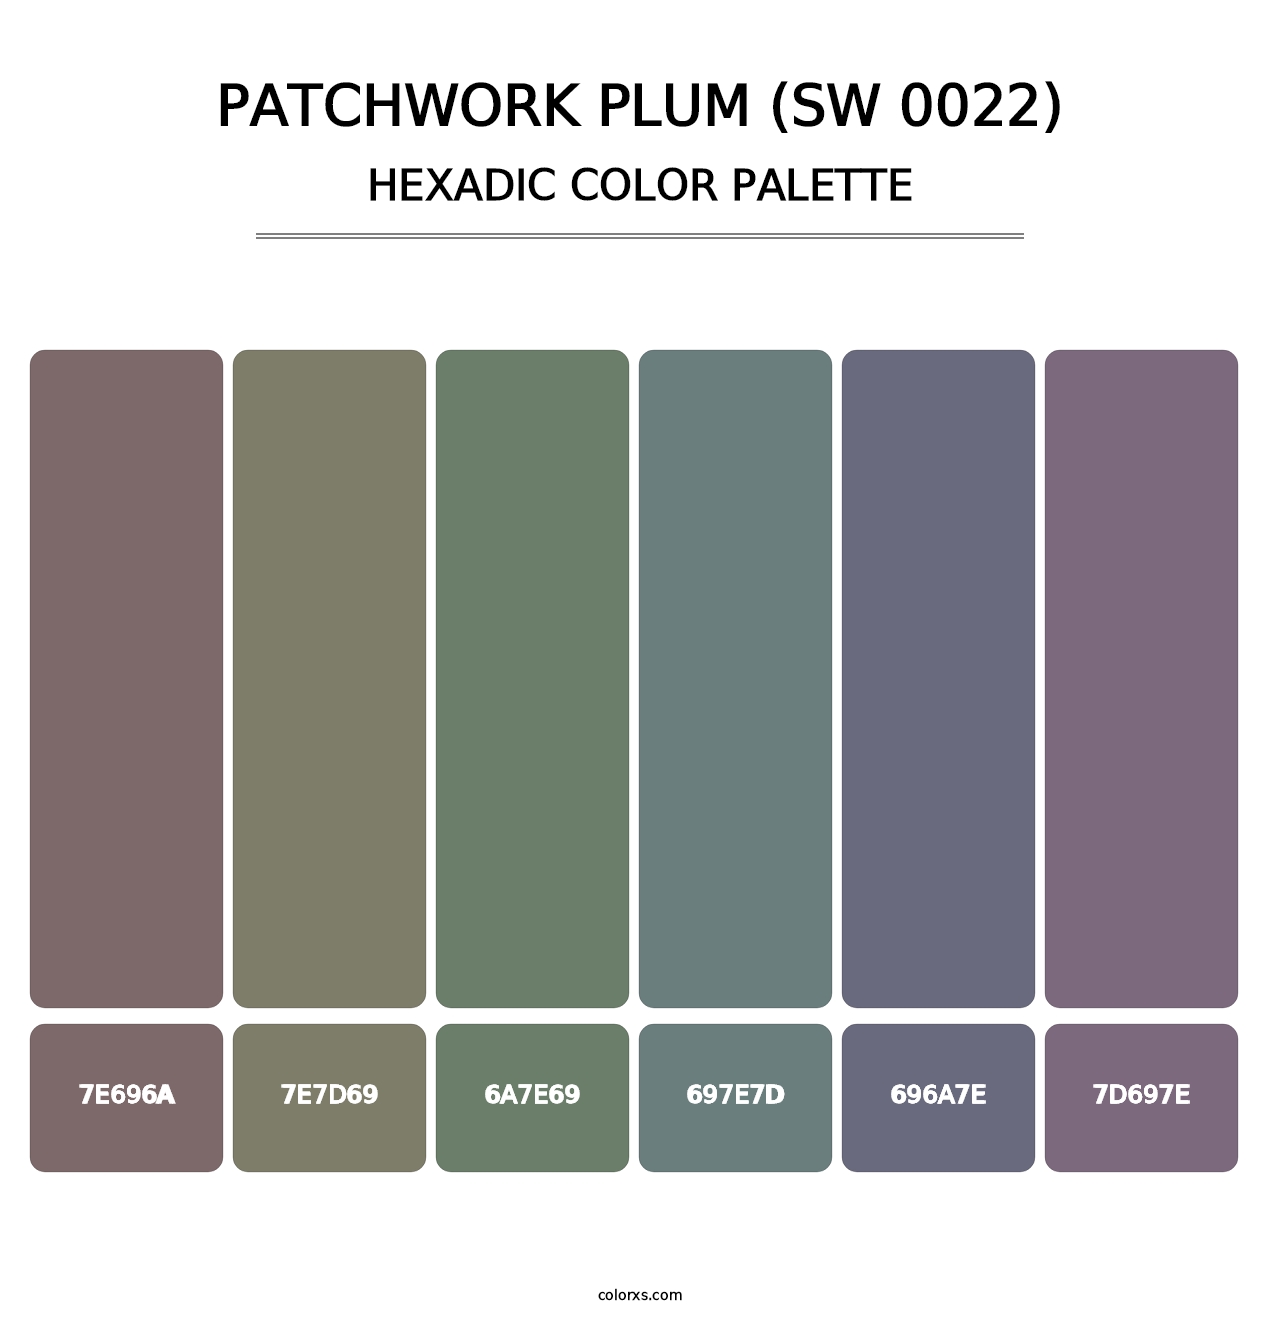 Patchwork Plum (SW 0022) - Hexadic Color Palette